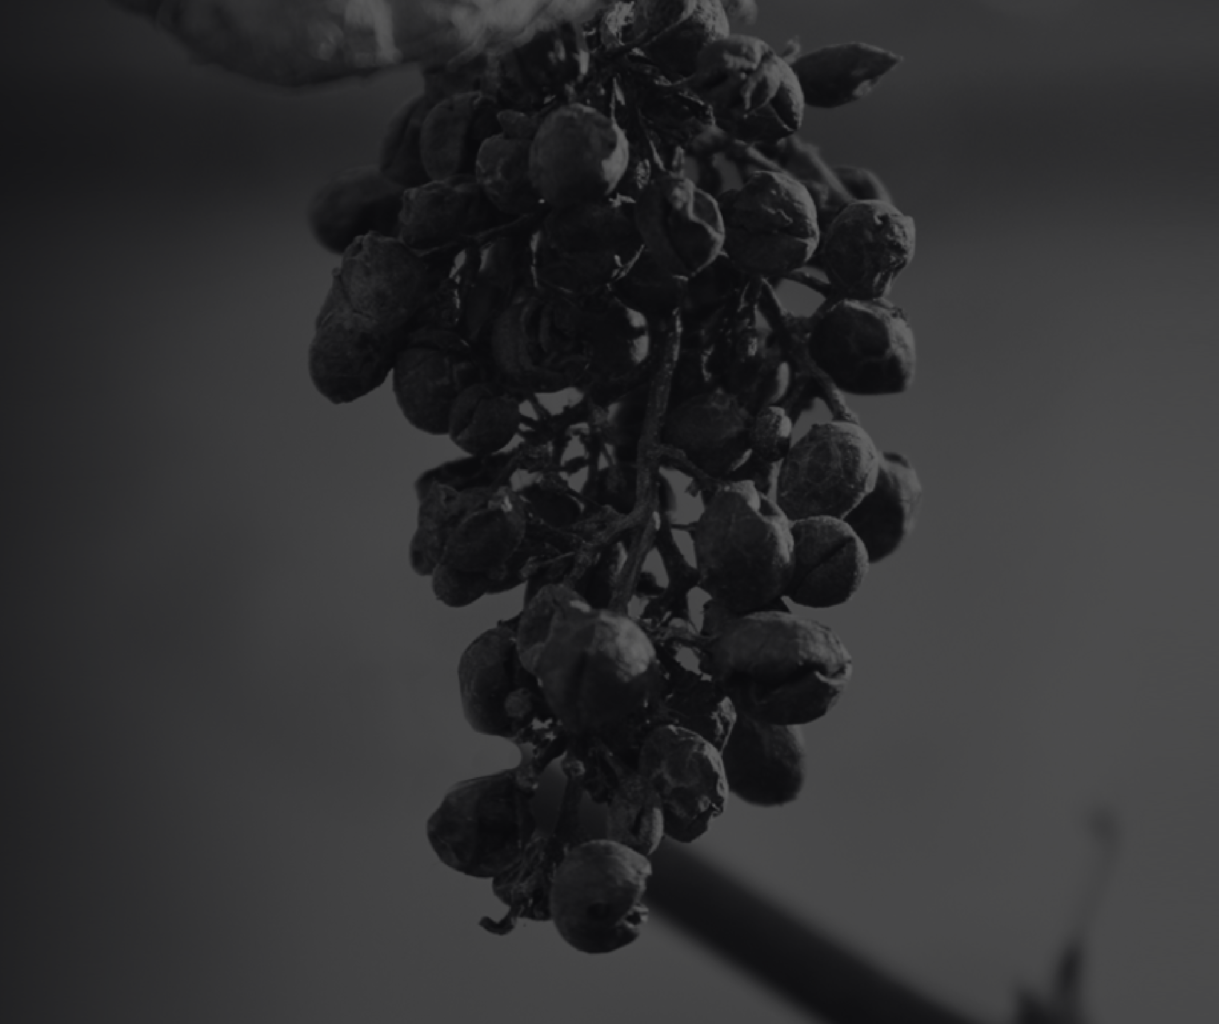 PR Agency main image of a vine